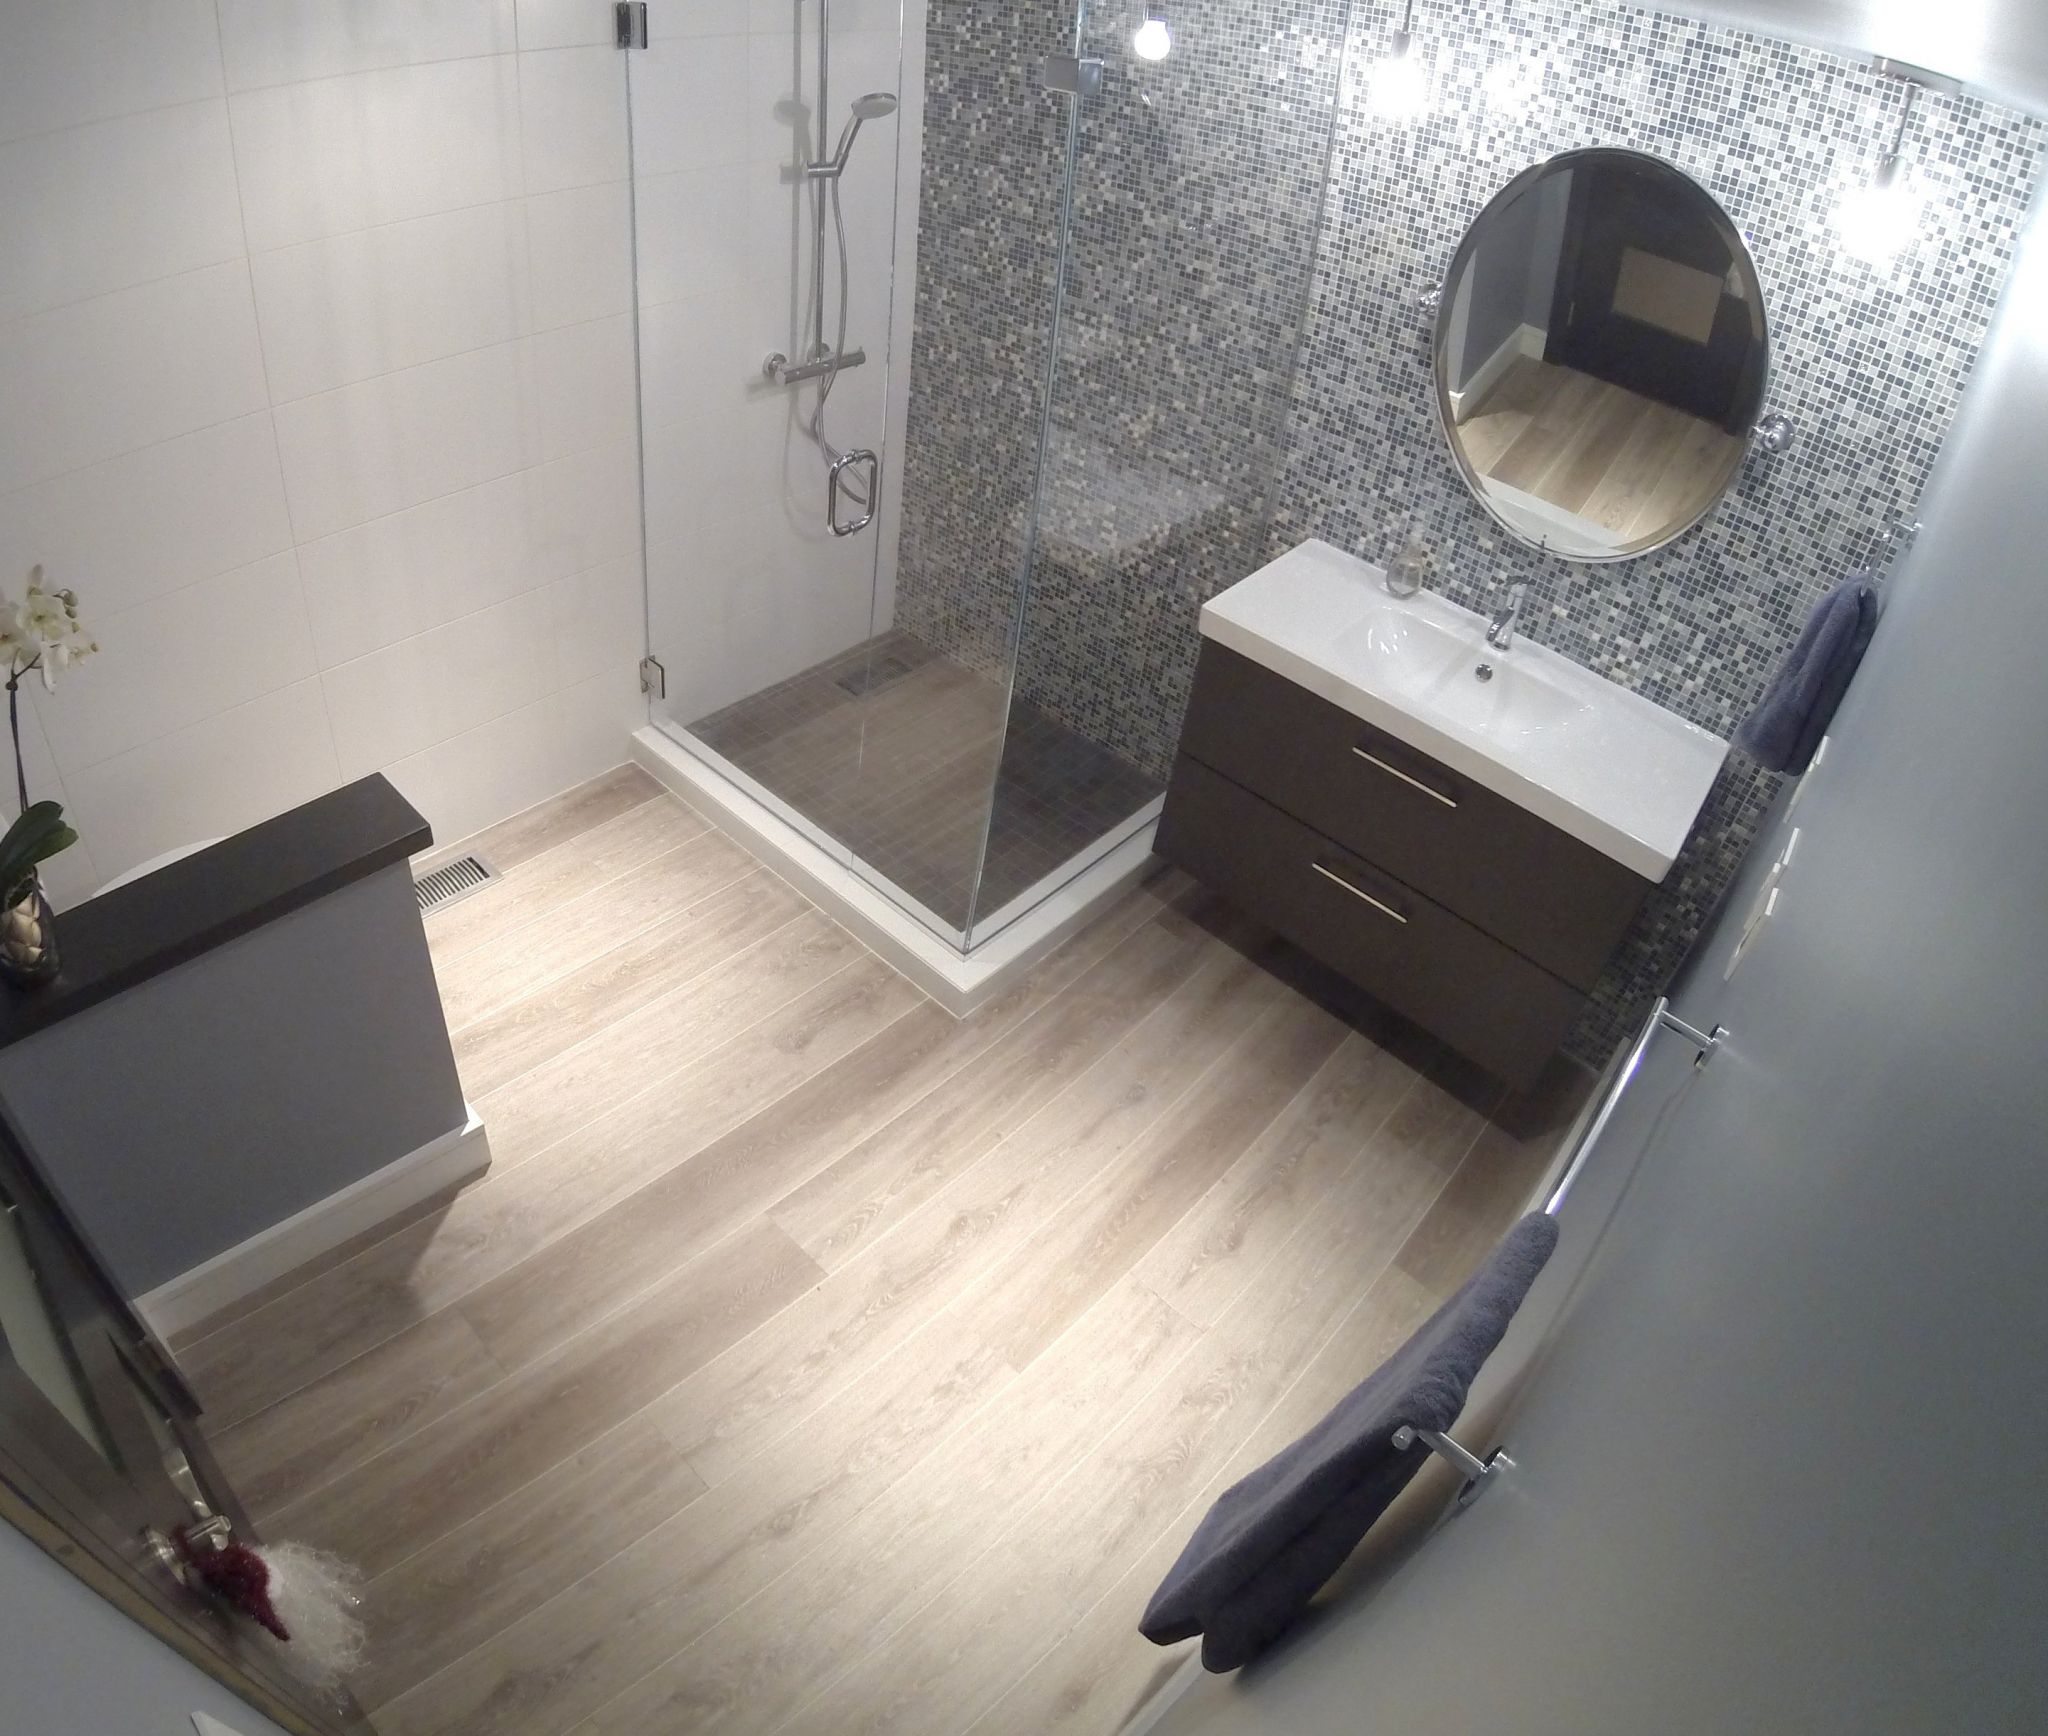 Remodeled bathroom with custom tile